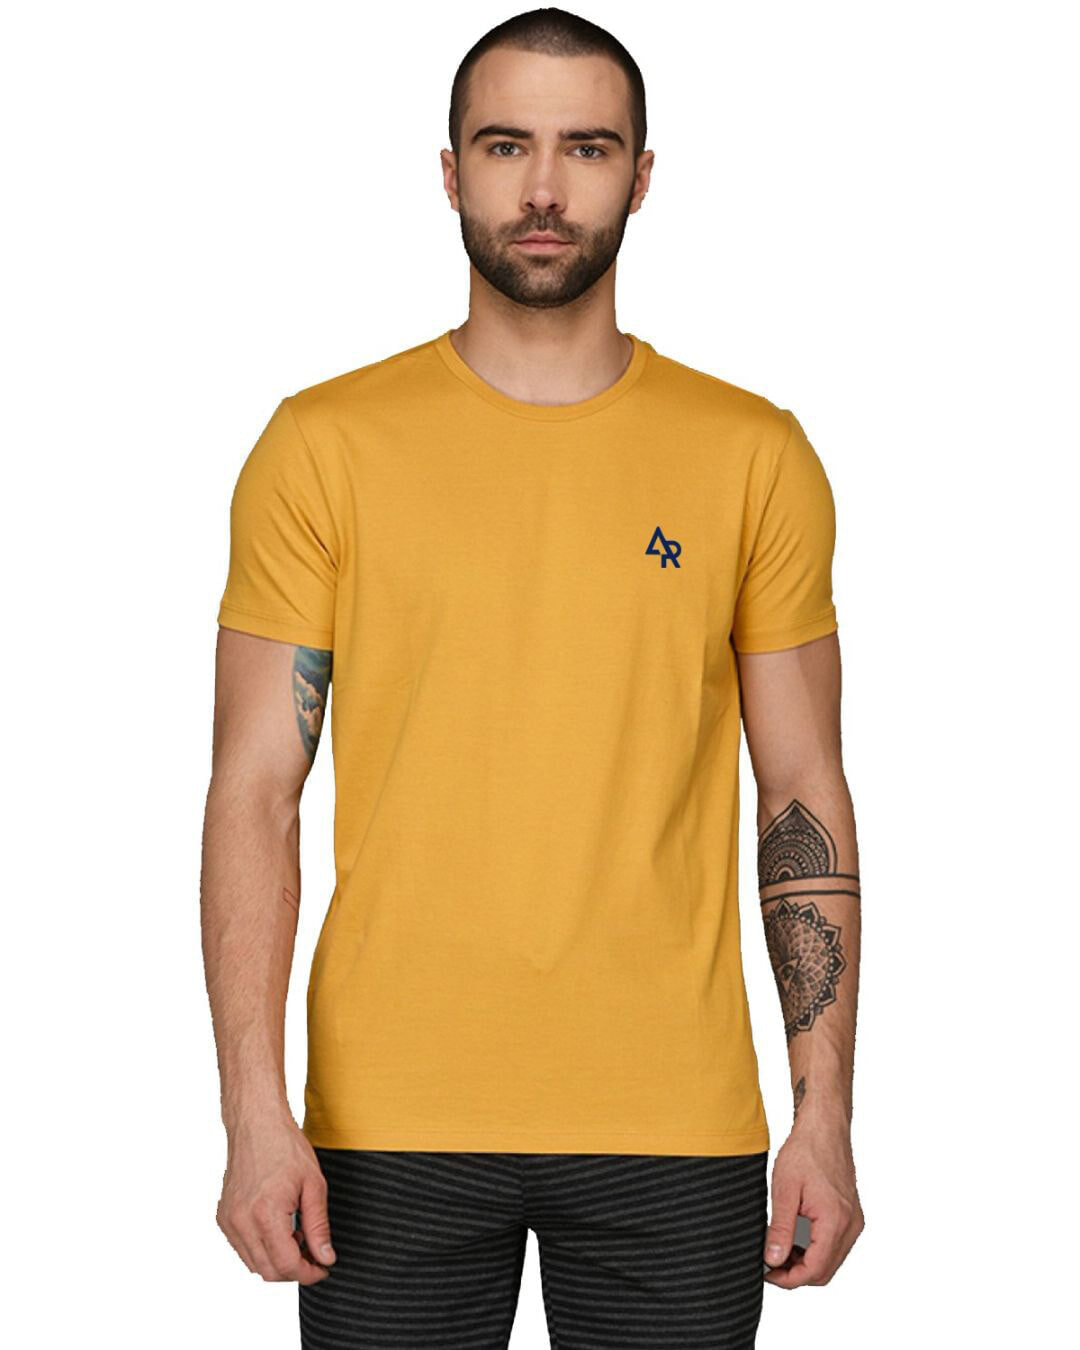 Boys Brand Logo Printed Yellow T-Shirt